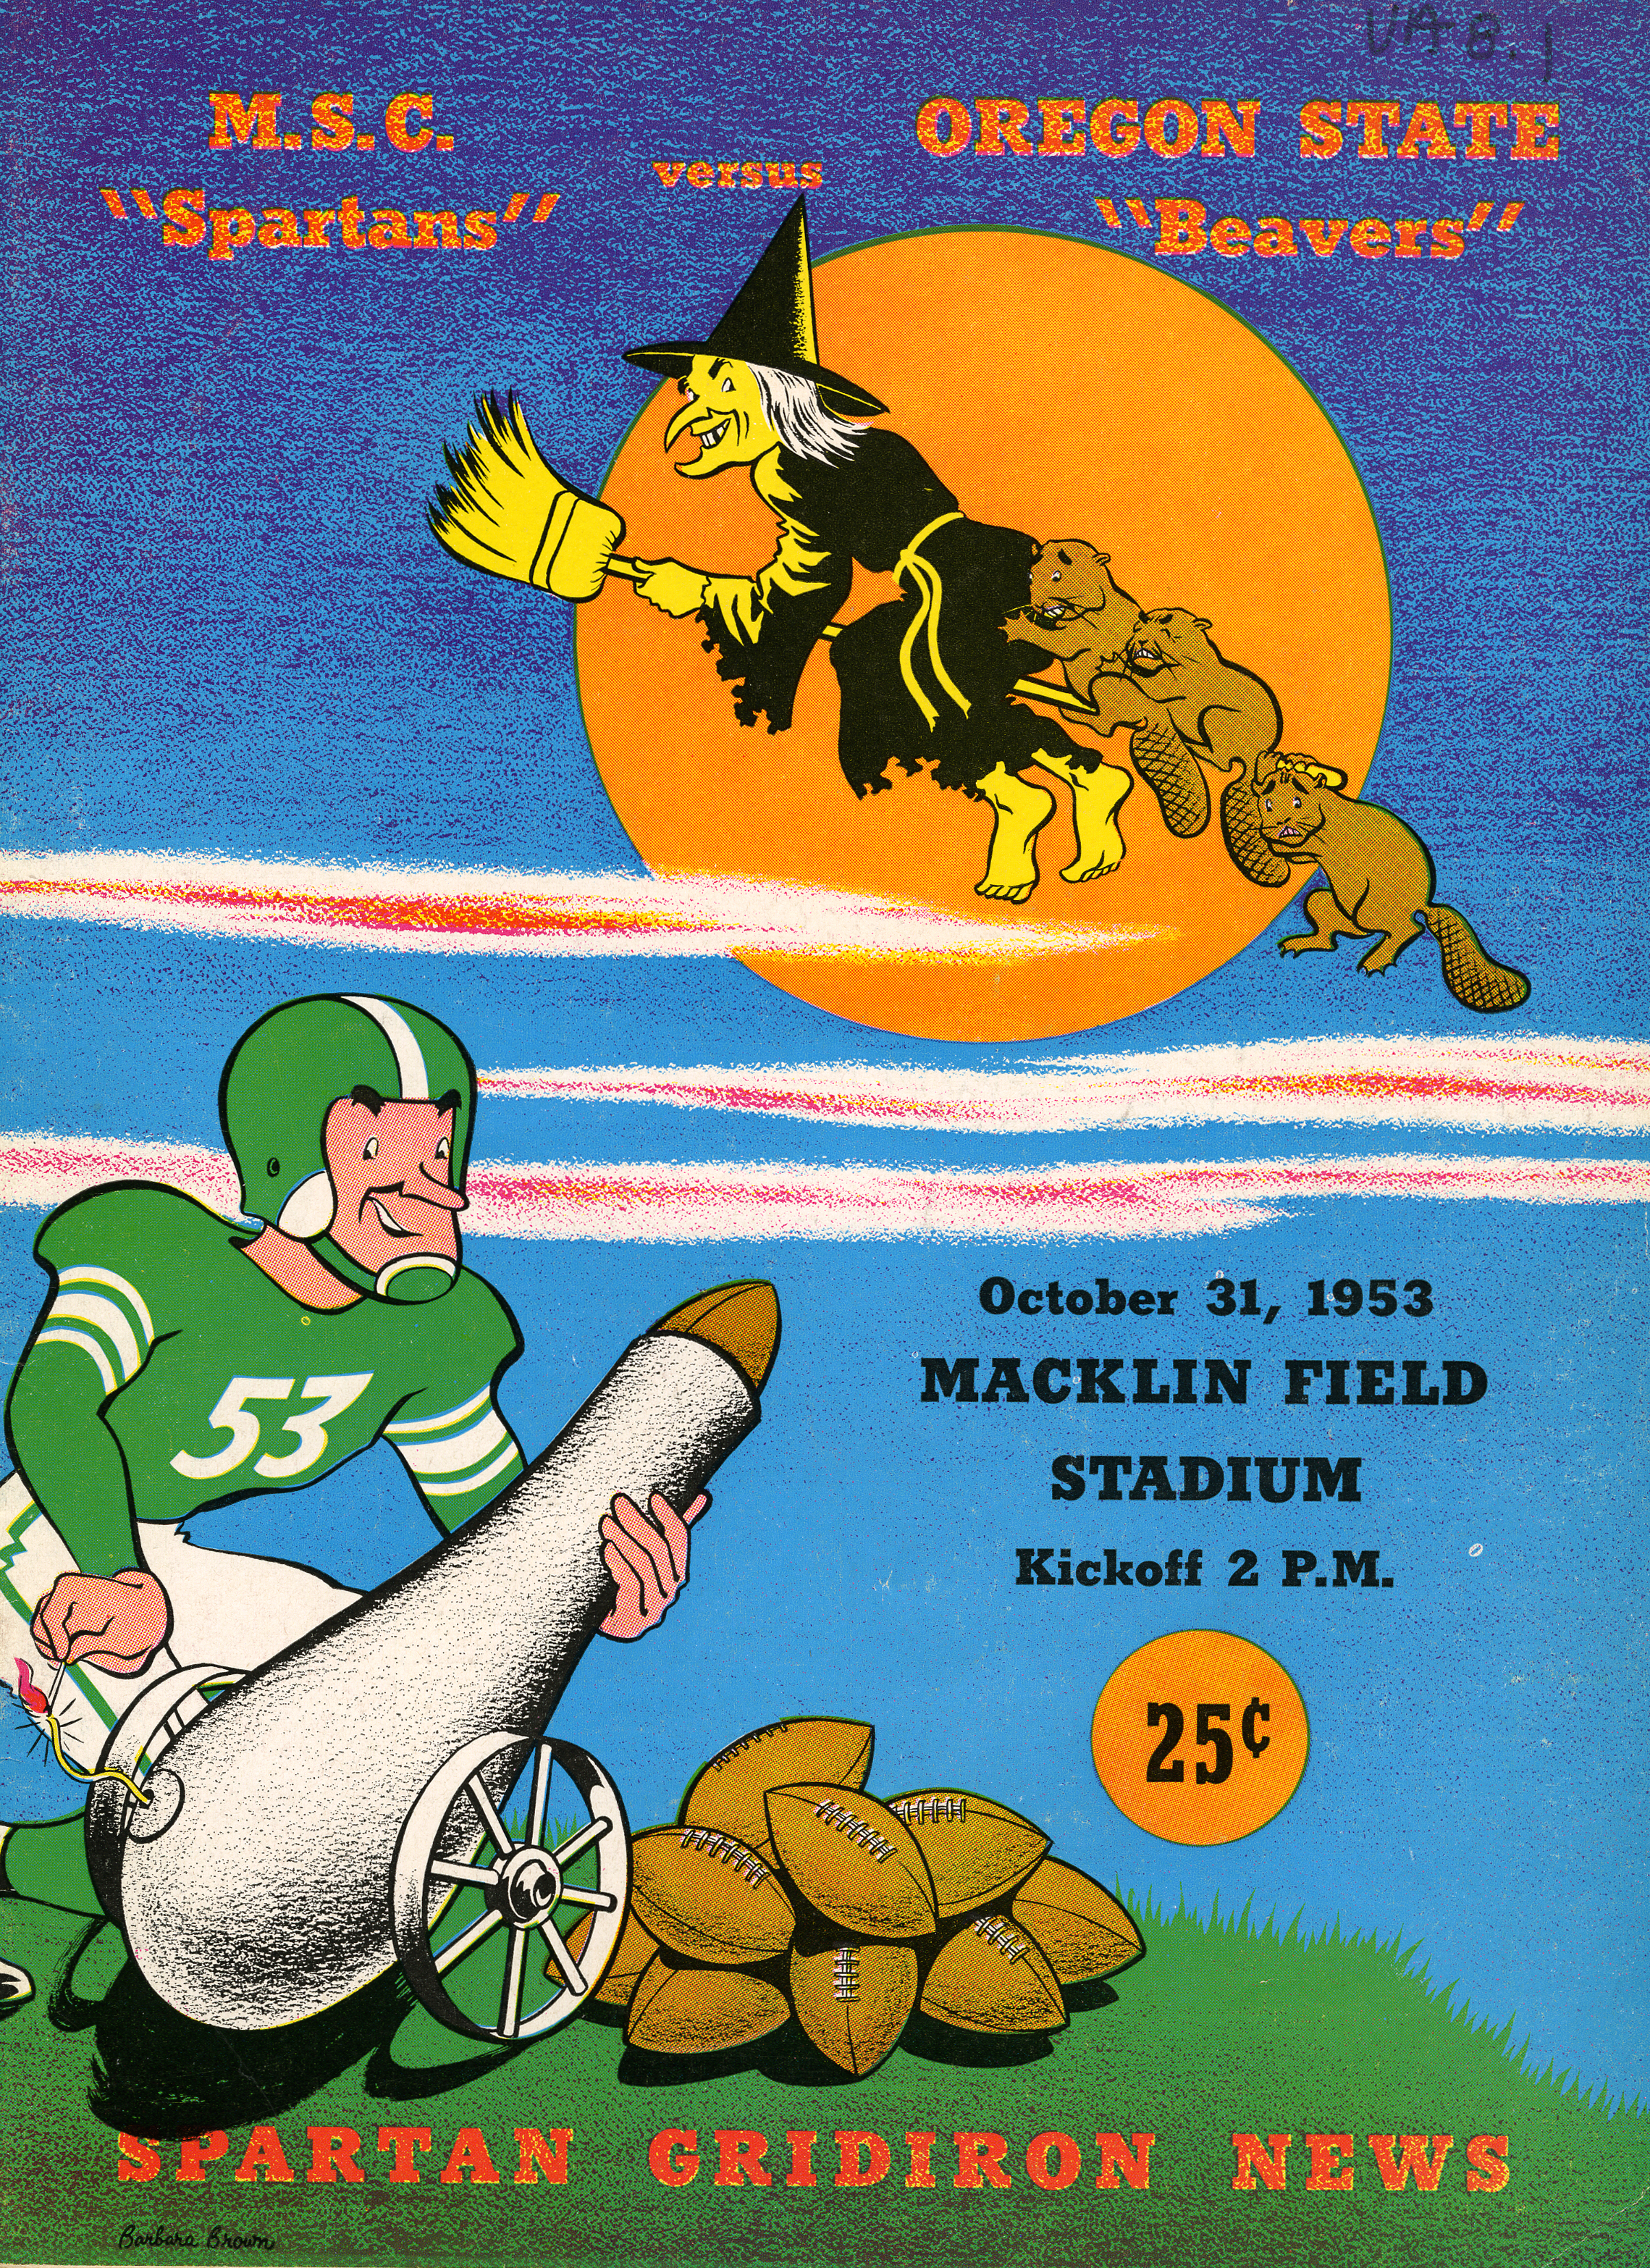 MSC vs. Oregon State, Spartan Gridiron News, October 31, 1953